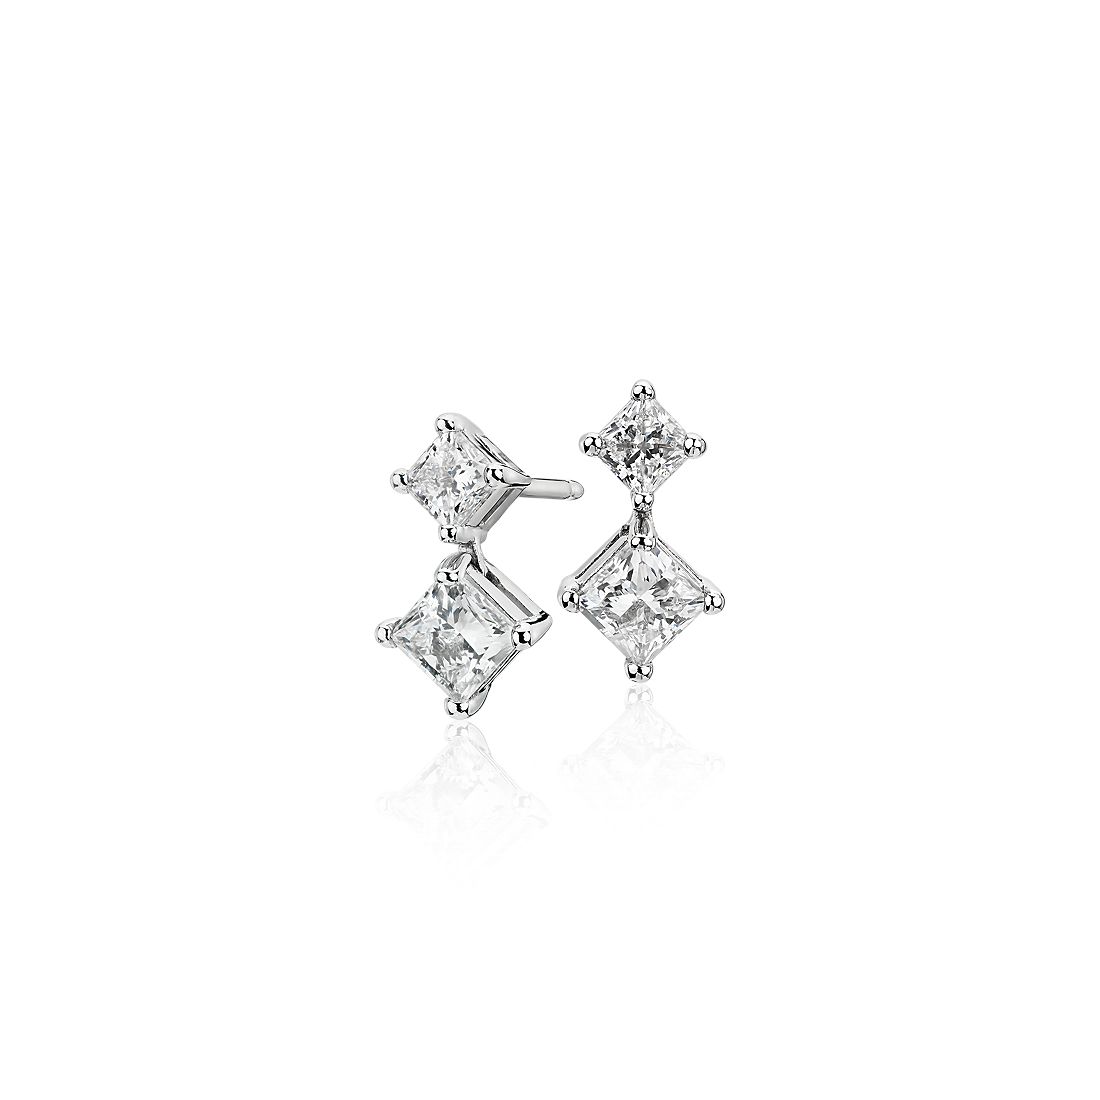 Blue Nile Signature Diamond Two-Stone Drop Earrings in Platinum (1 1/8 ct. tw.)